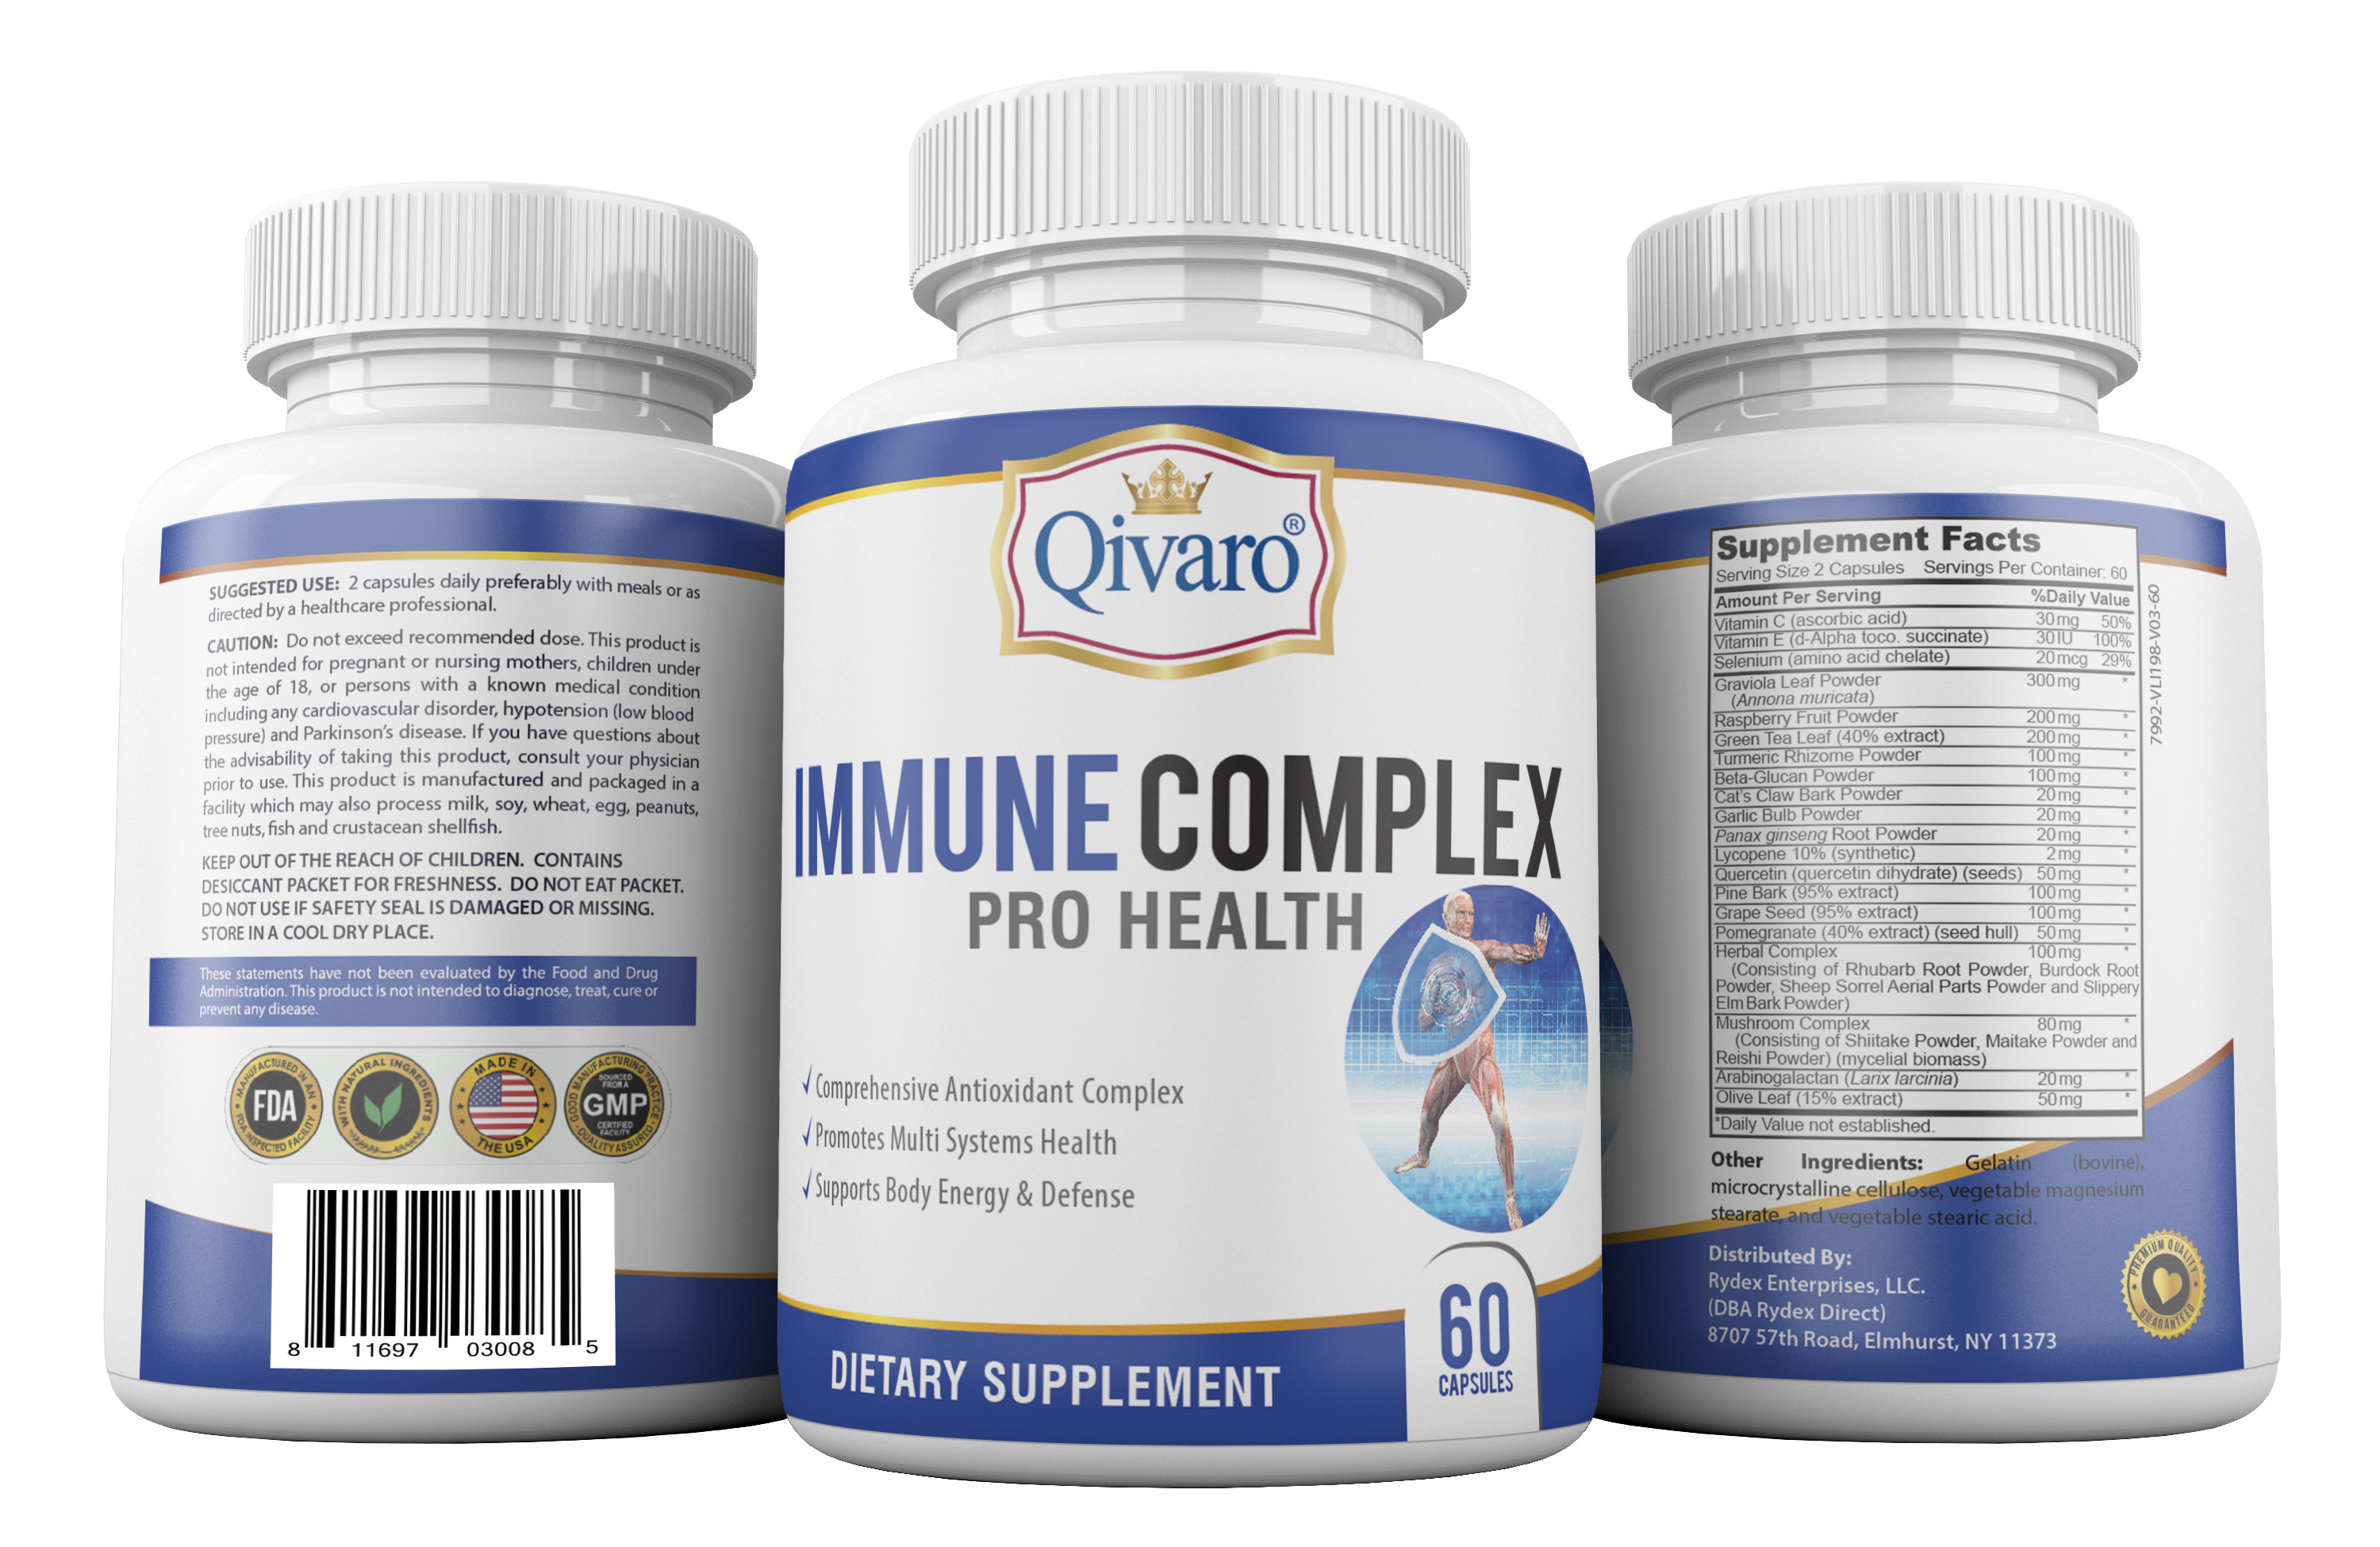 QIH05_15 抗疫孖寶 - 免疫清肺寶 | IMMUNE RESPIRATORY COMPLEX PRO HEALTH by QIVARO